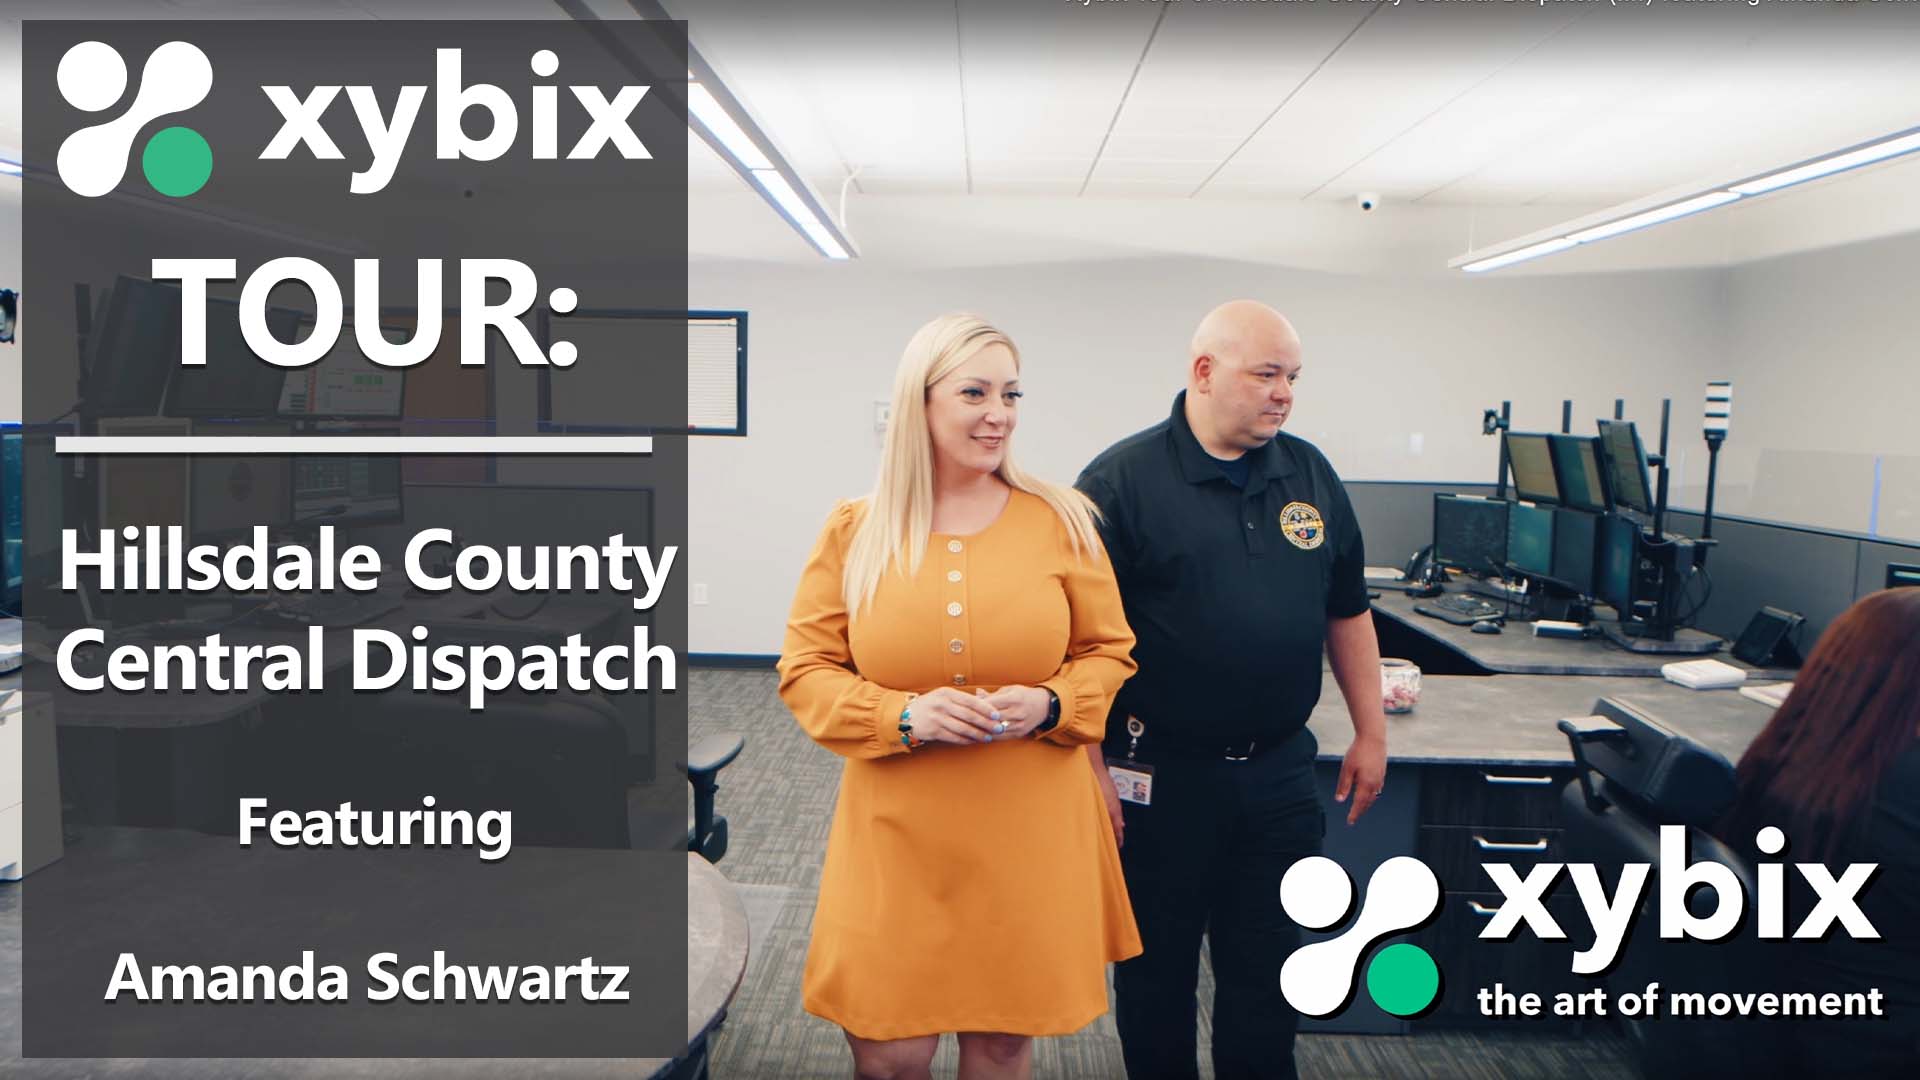 Xybix Tour of Hillsdale County Central Dispatch (MI) featuring Amanda Schwartz